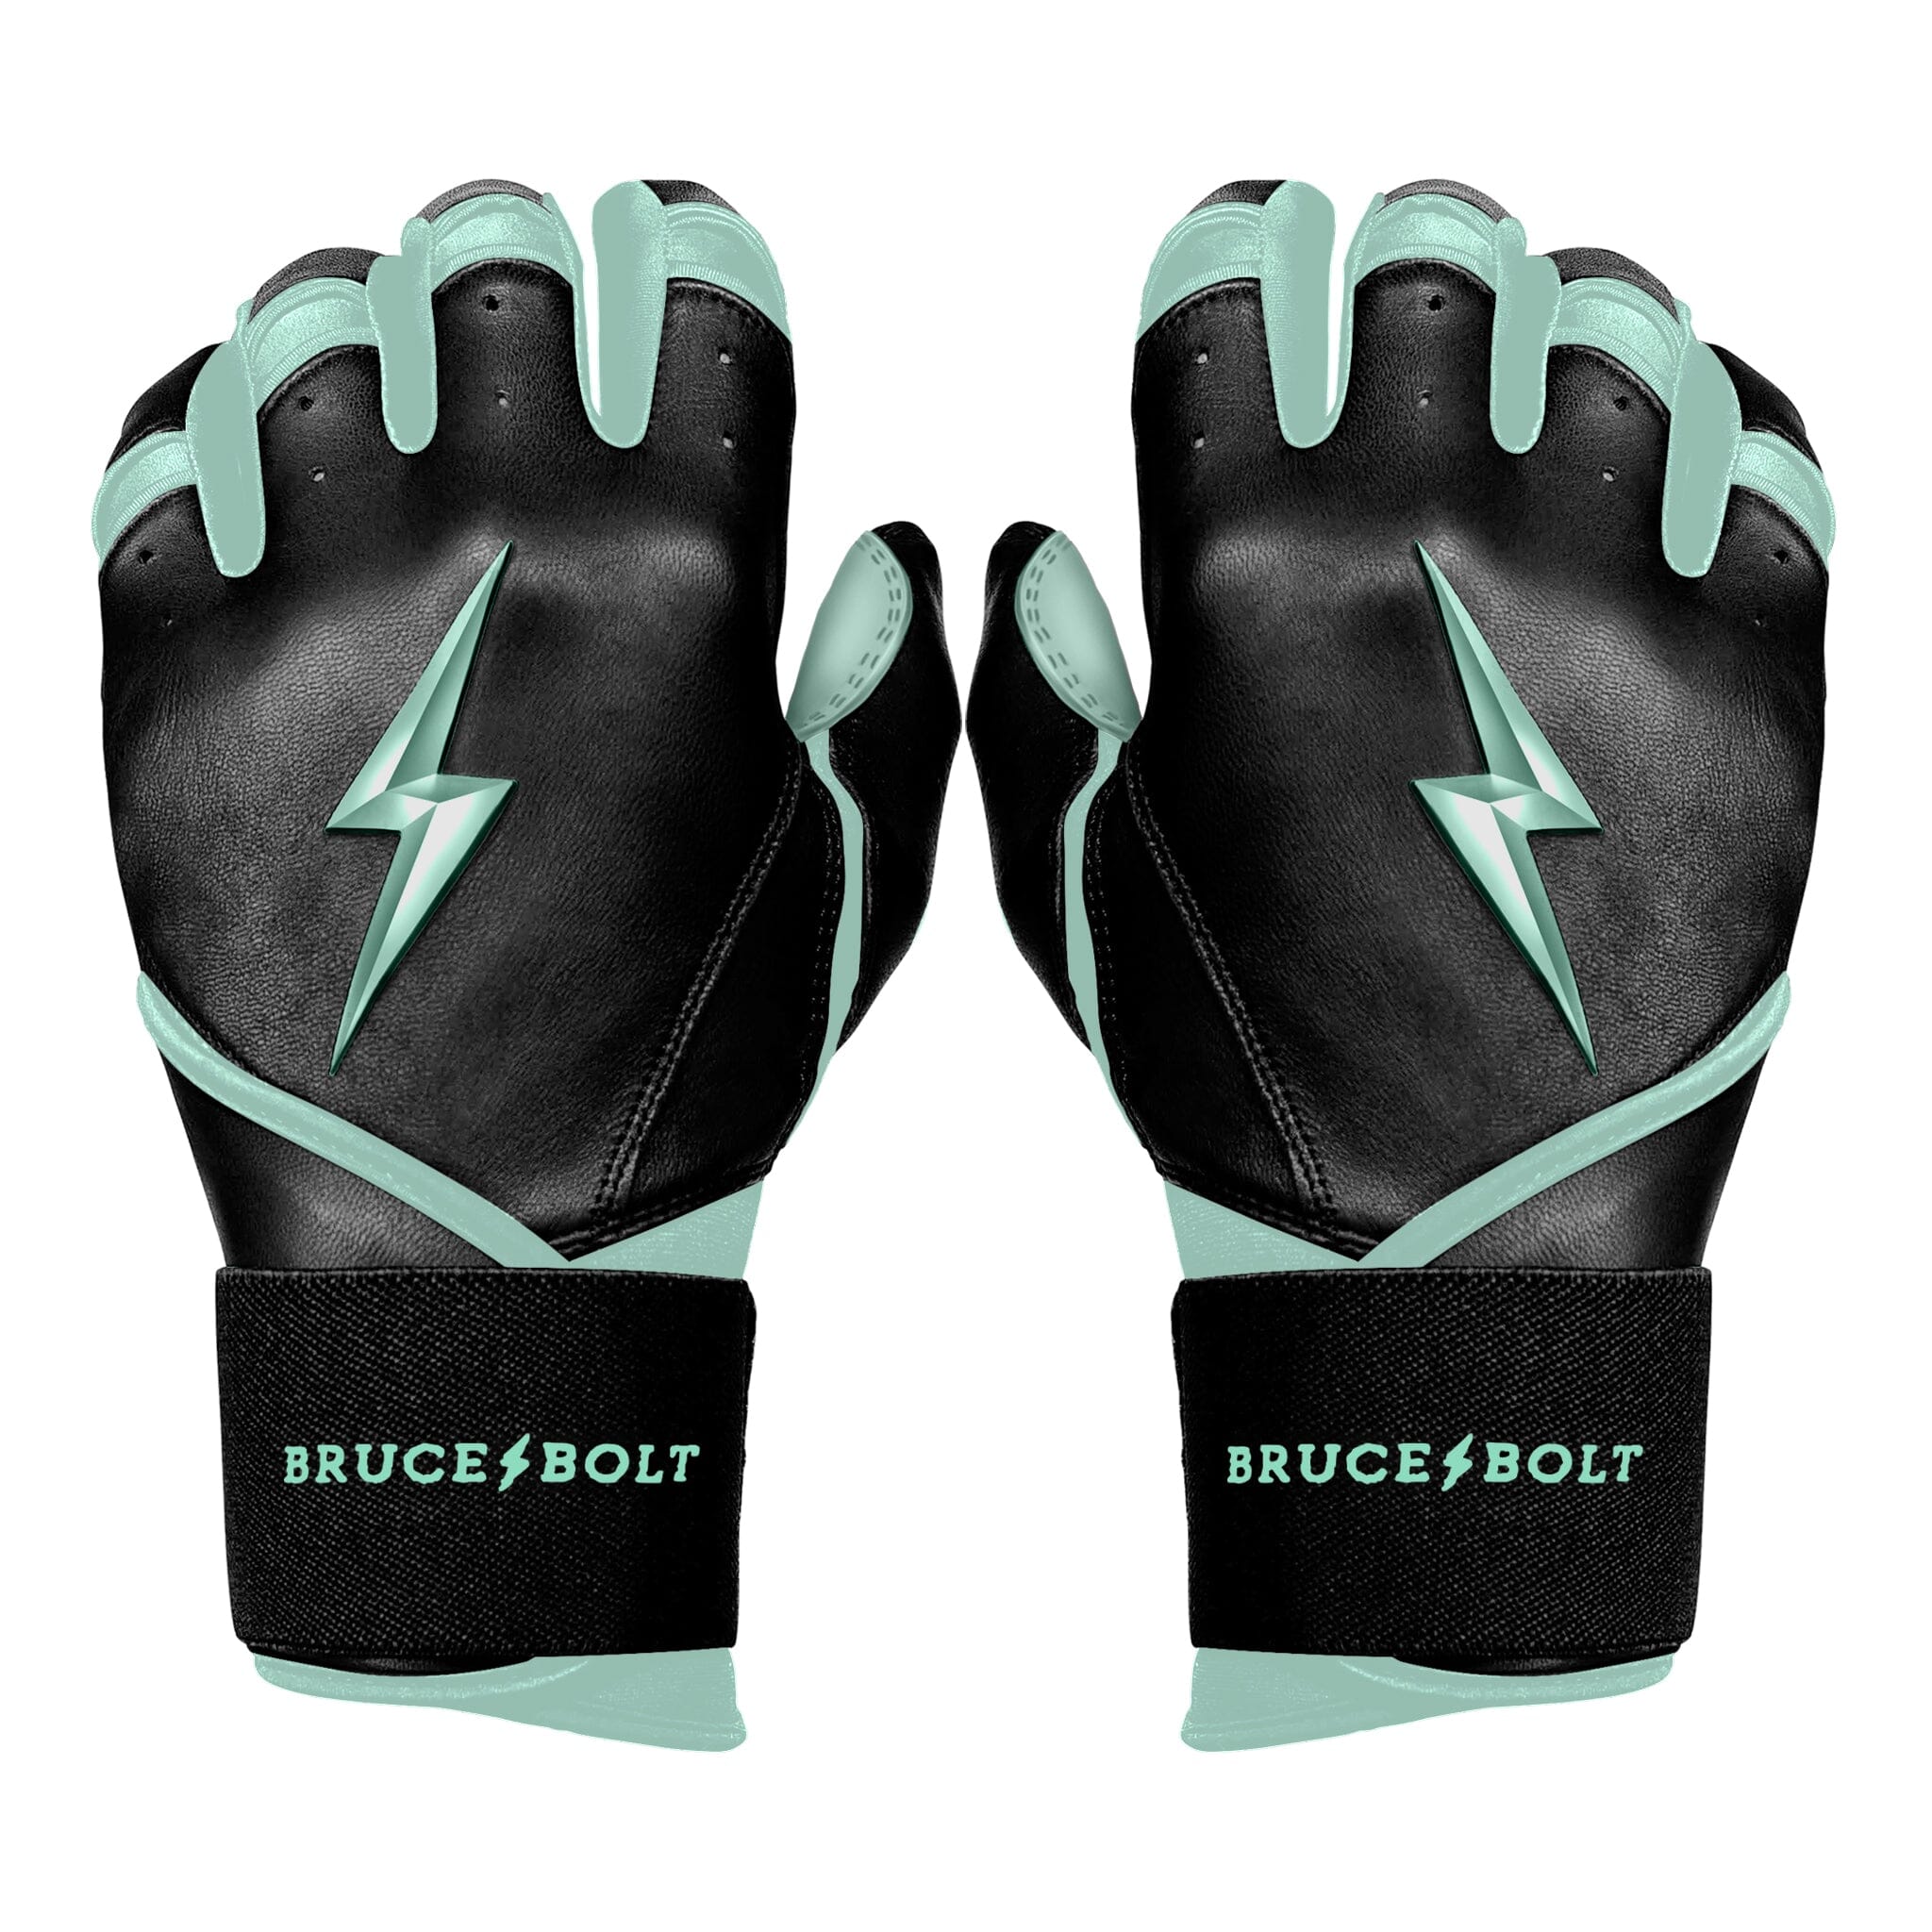 Bruce Bolt Adult Premium Pro Long Cuff Pair of Batting Gloves